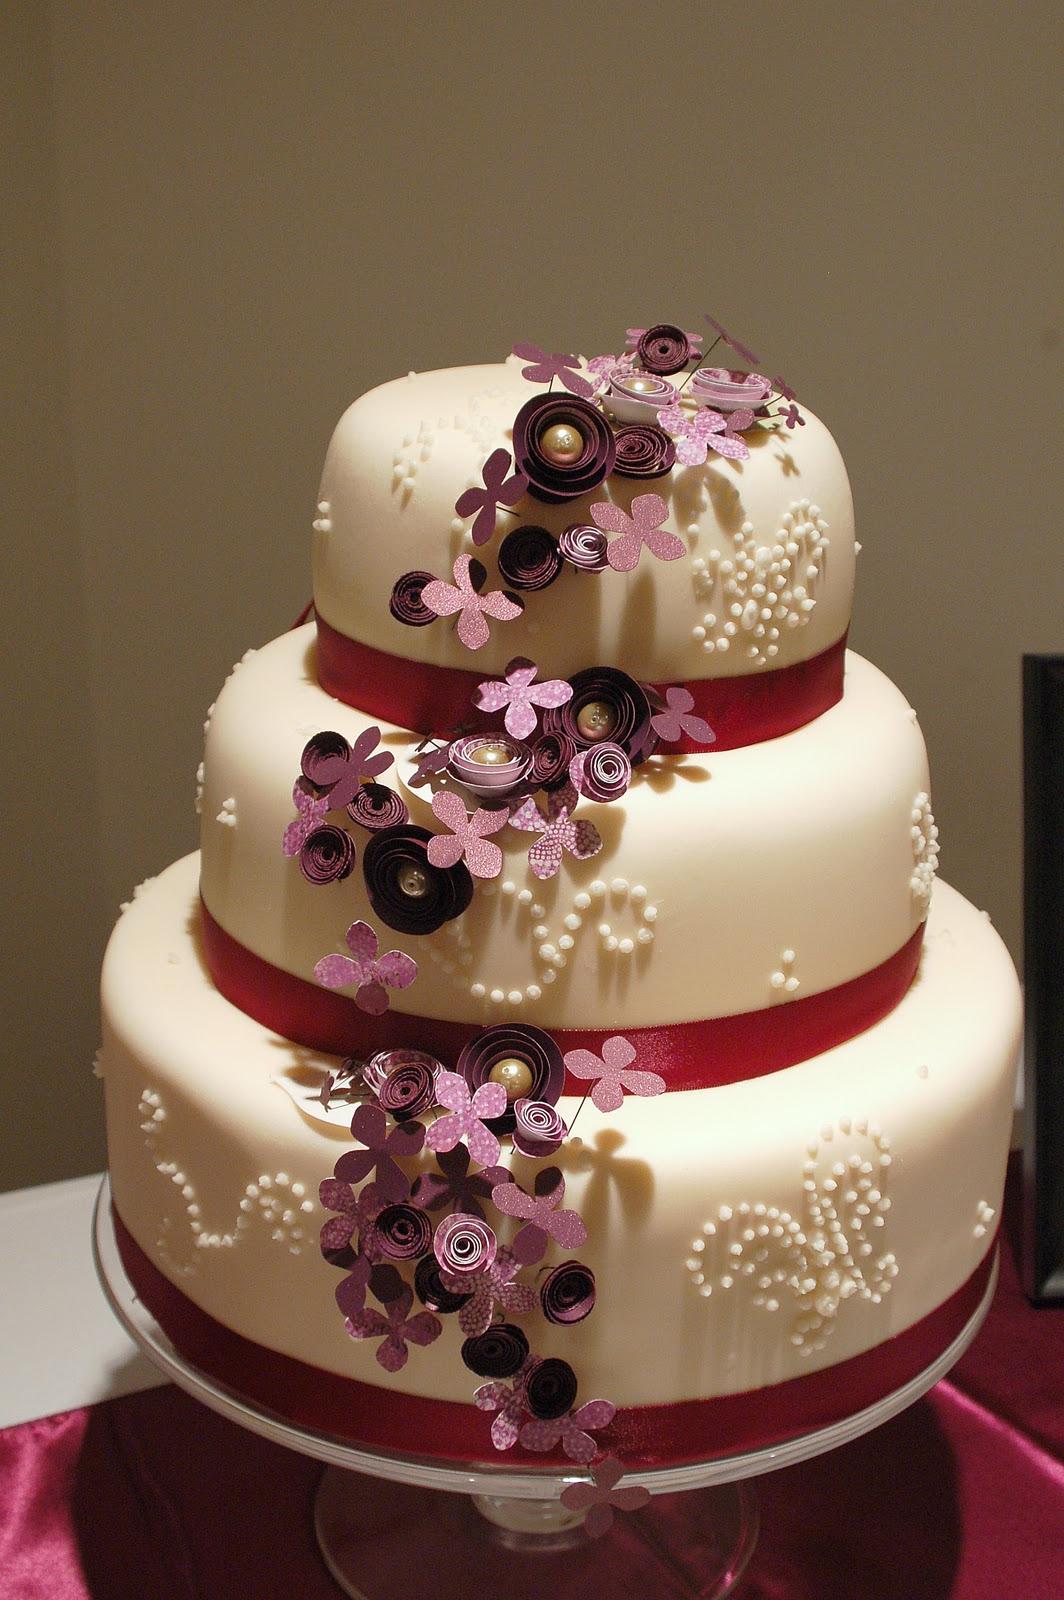 make the wedding cake for